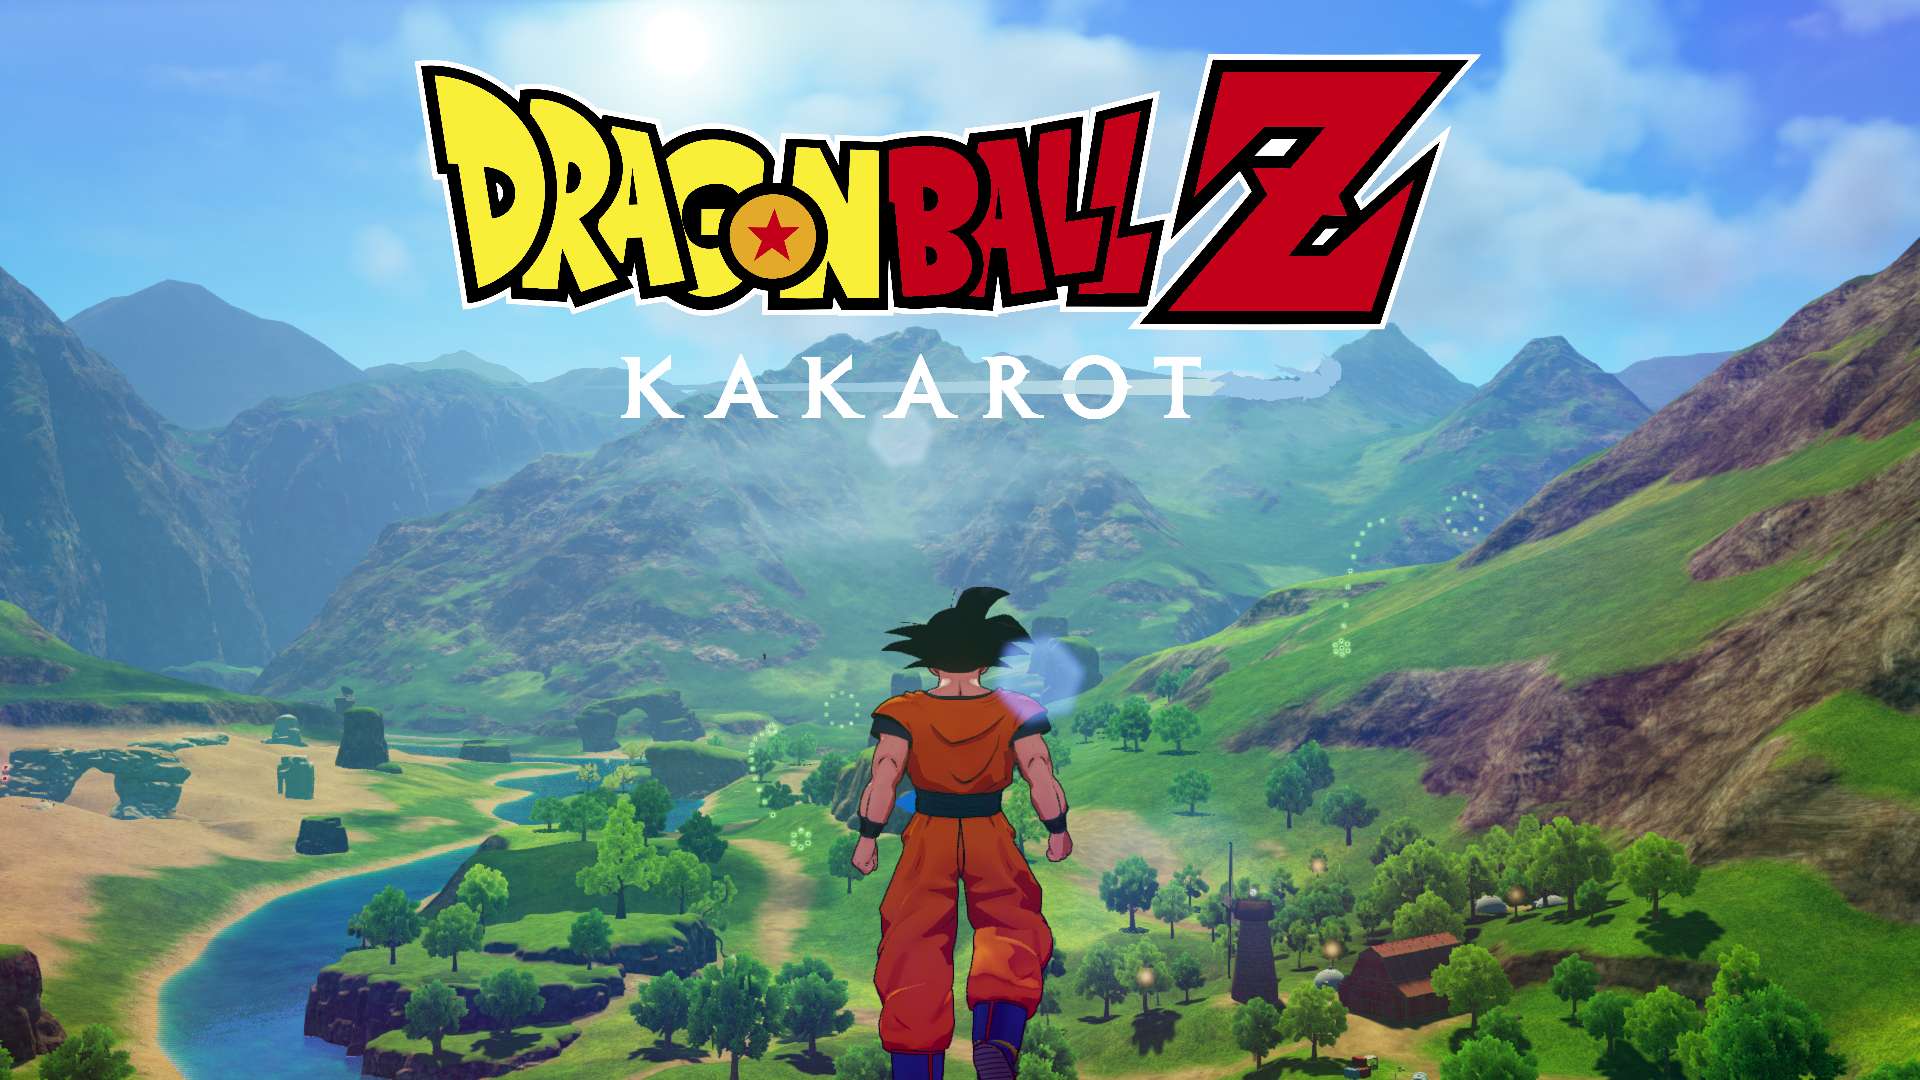 DRAGON BALL Z KAKAROT arriva a gennaio 2023 su Console